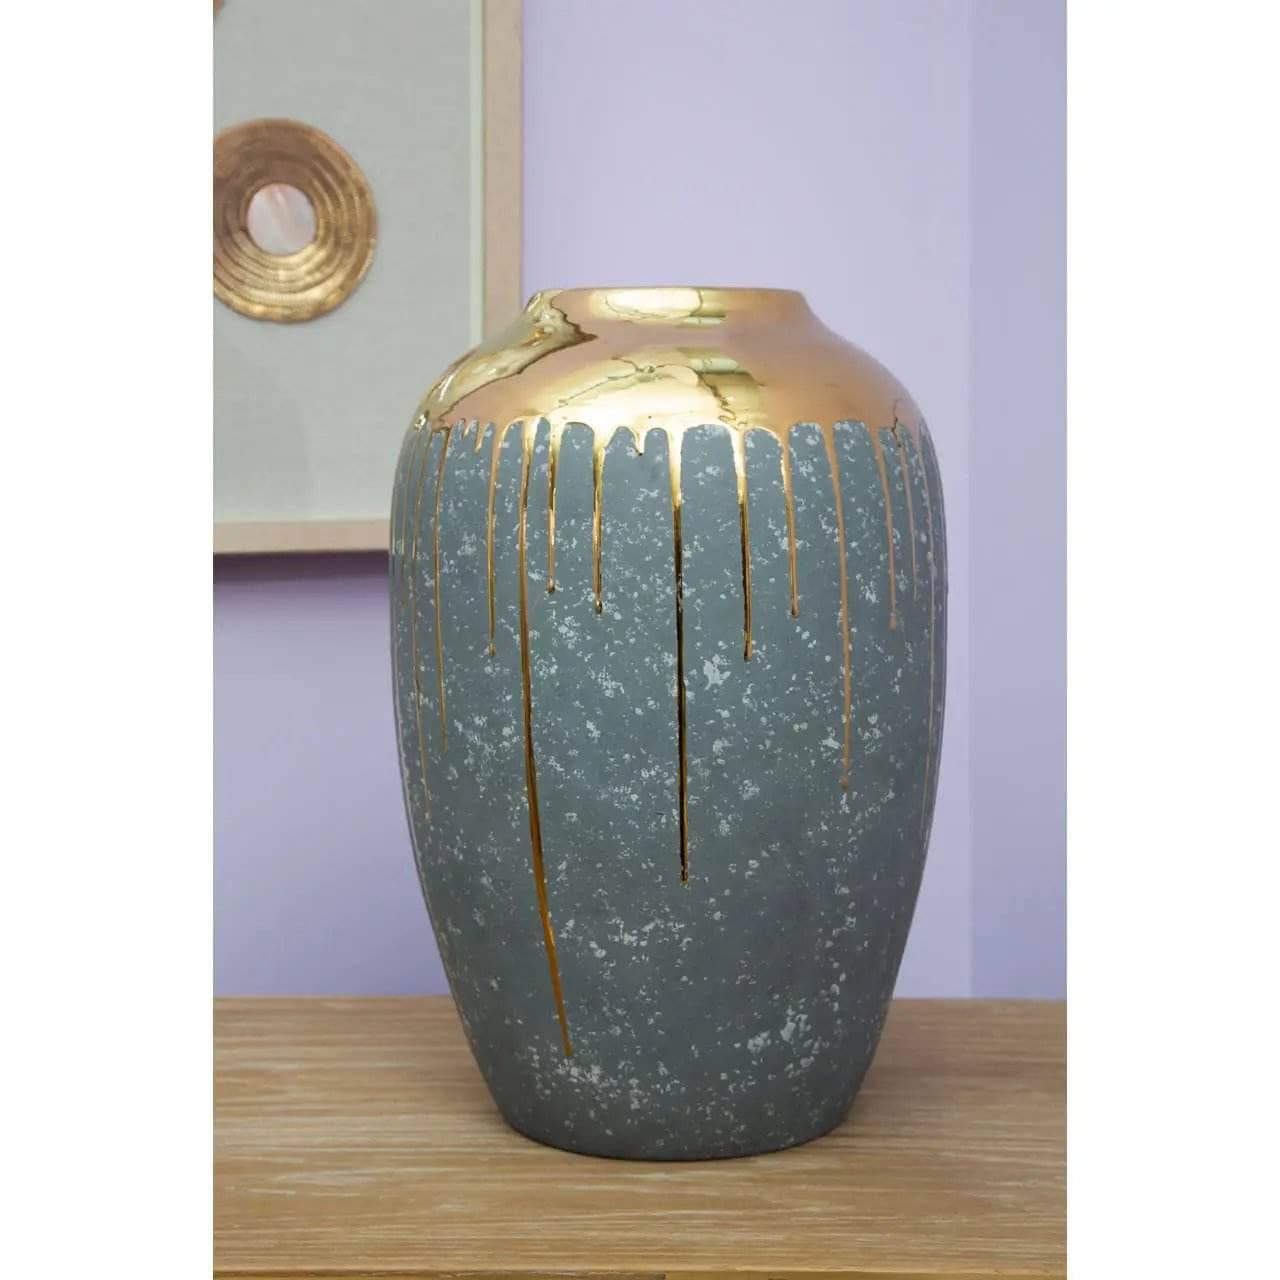 Homeware  -  Cyrus Large Vase- Small  -  60003478